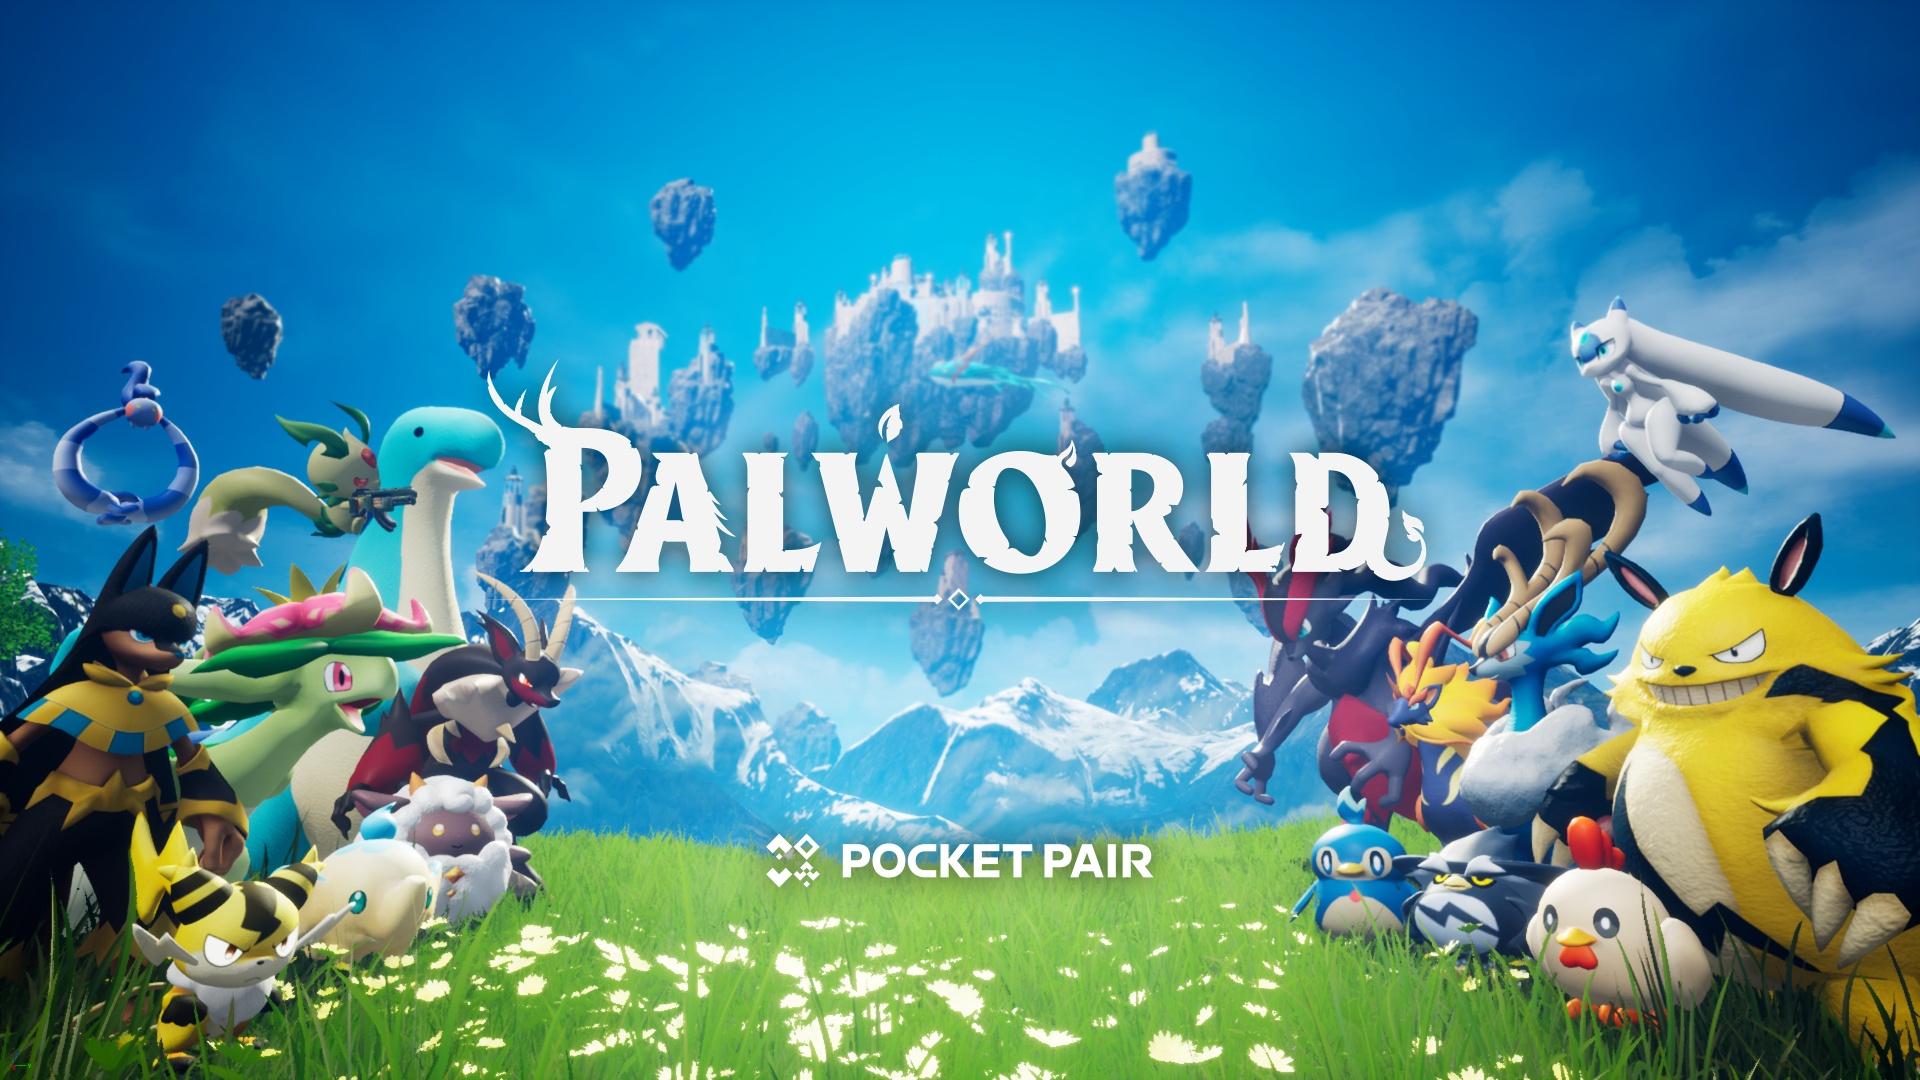 Palworld official artwork